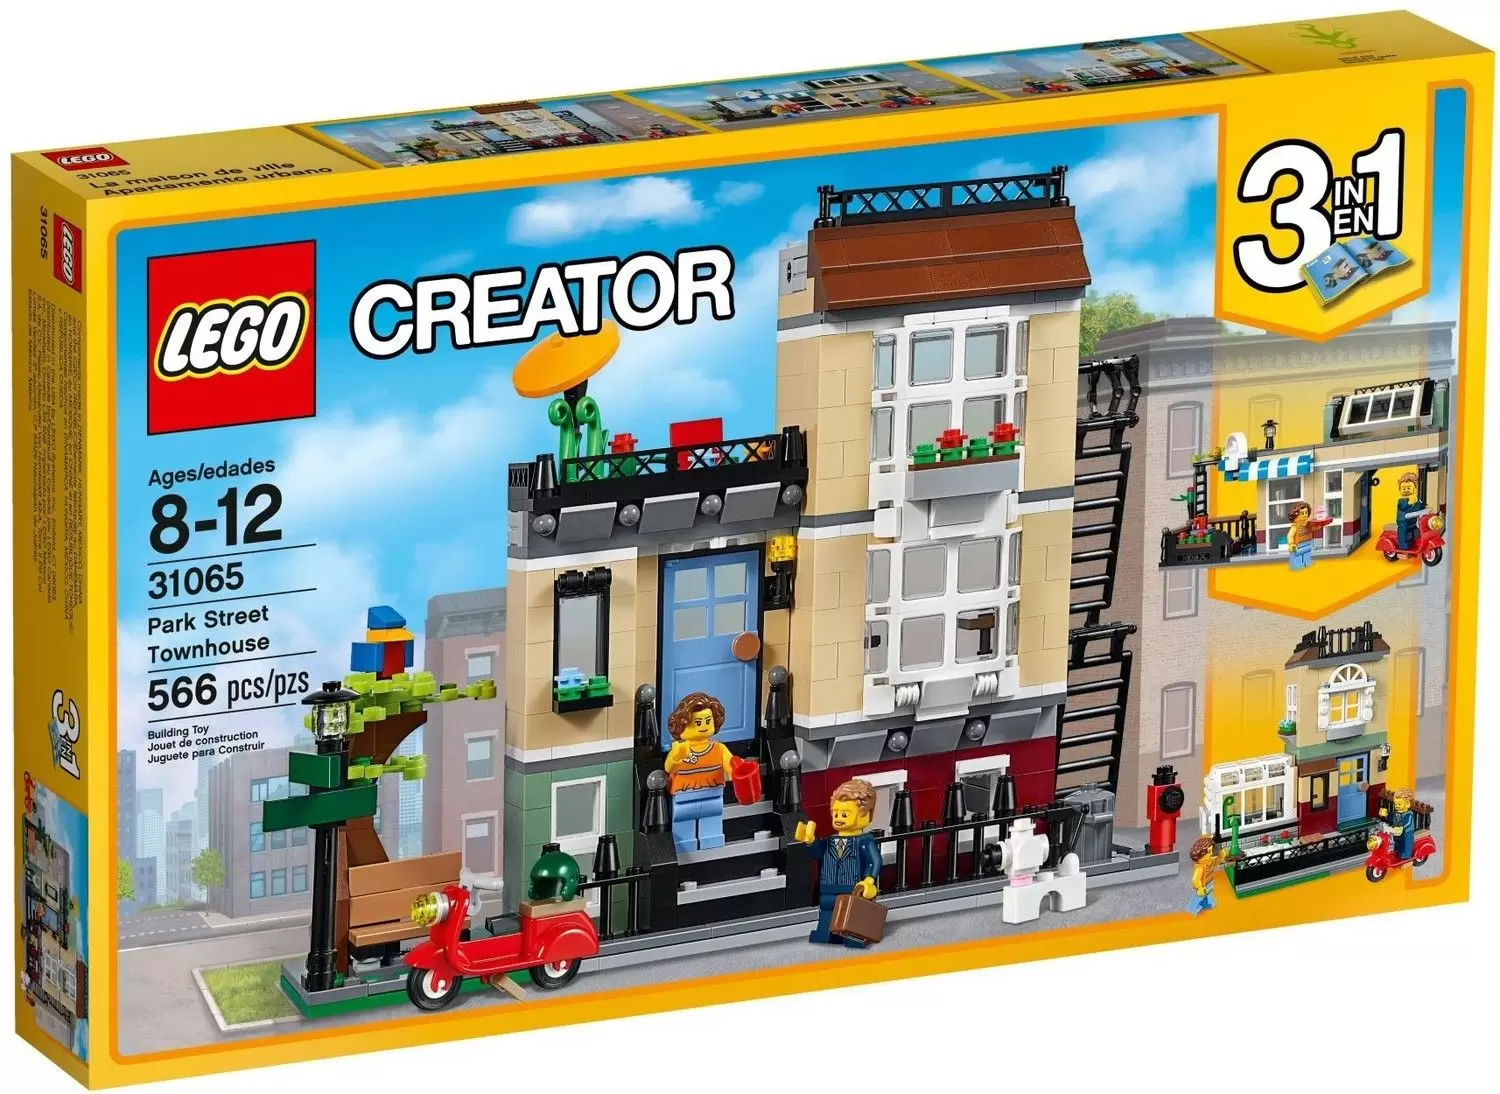 LEGO Creator - Park Street Townhouse